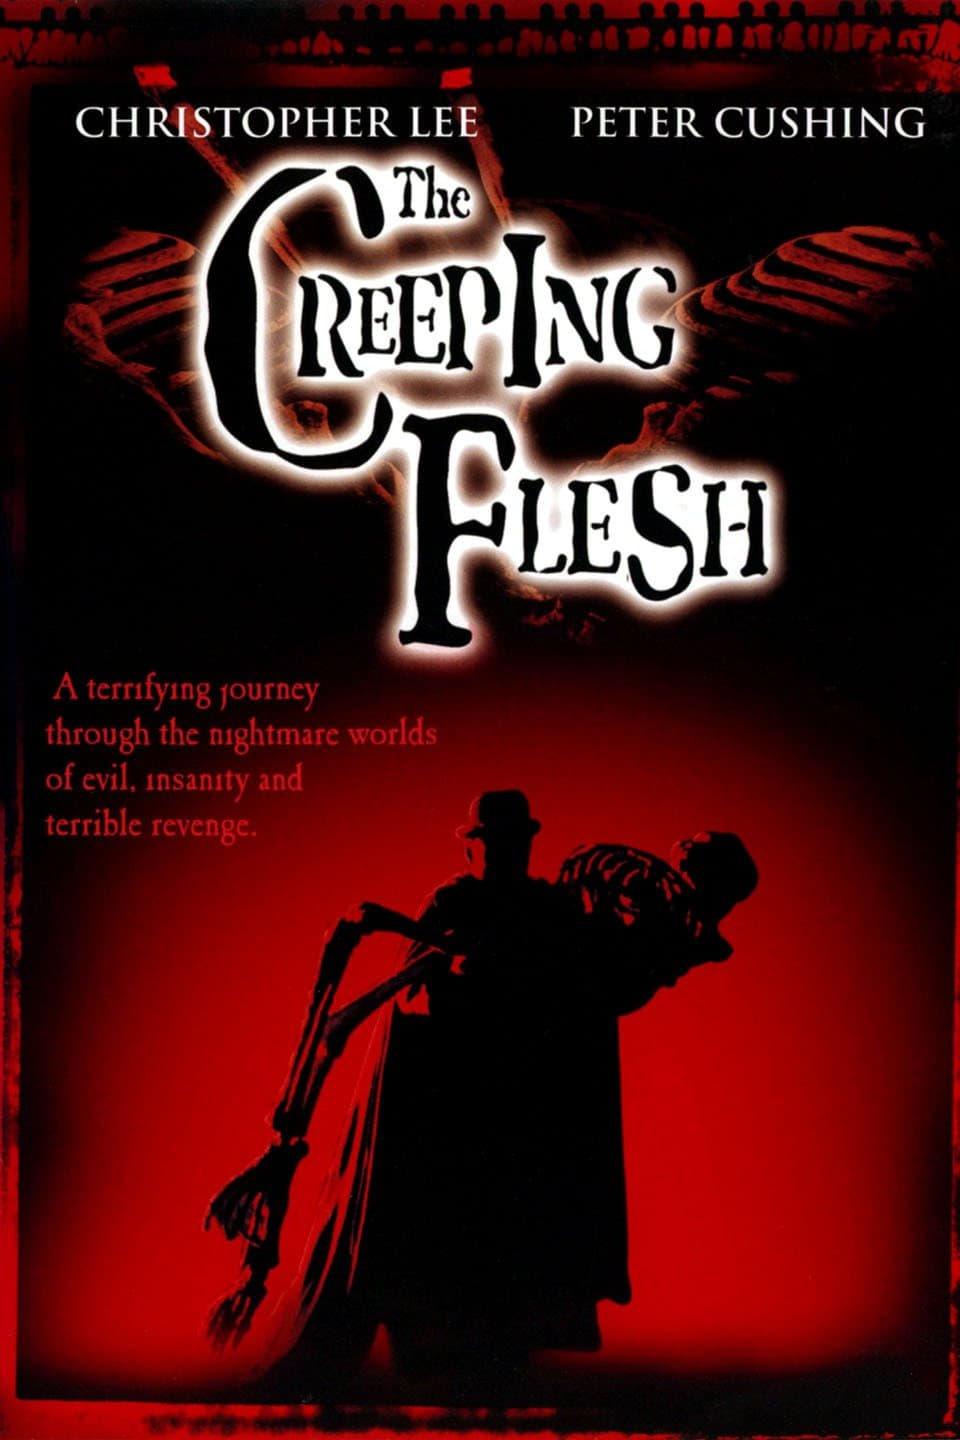 The Creeping Flesh poster